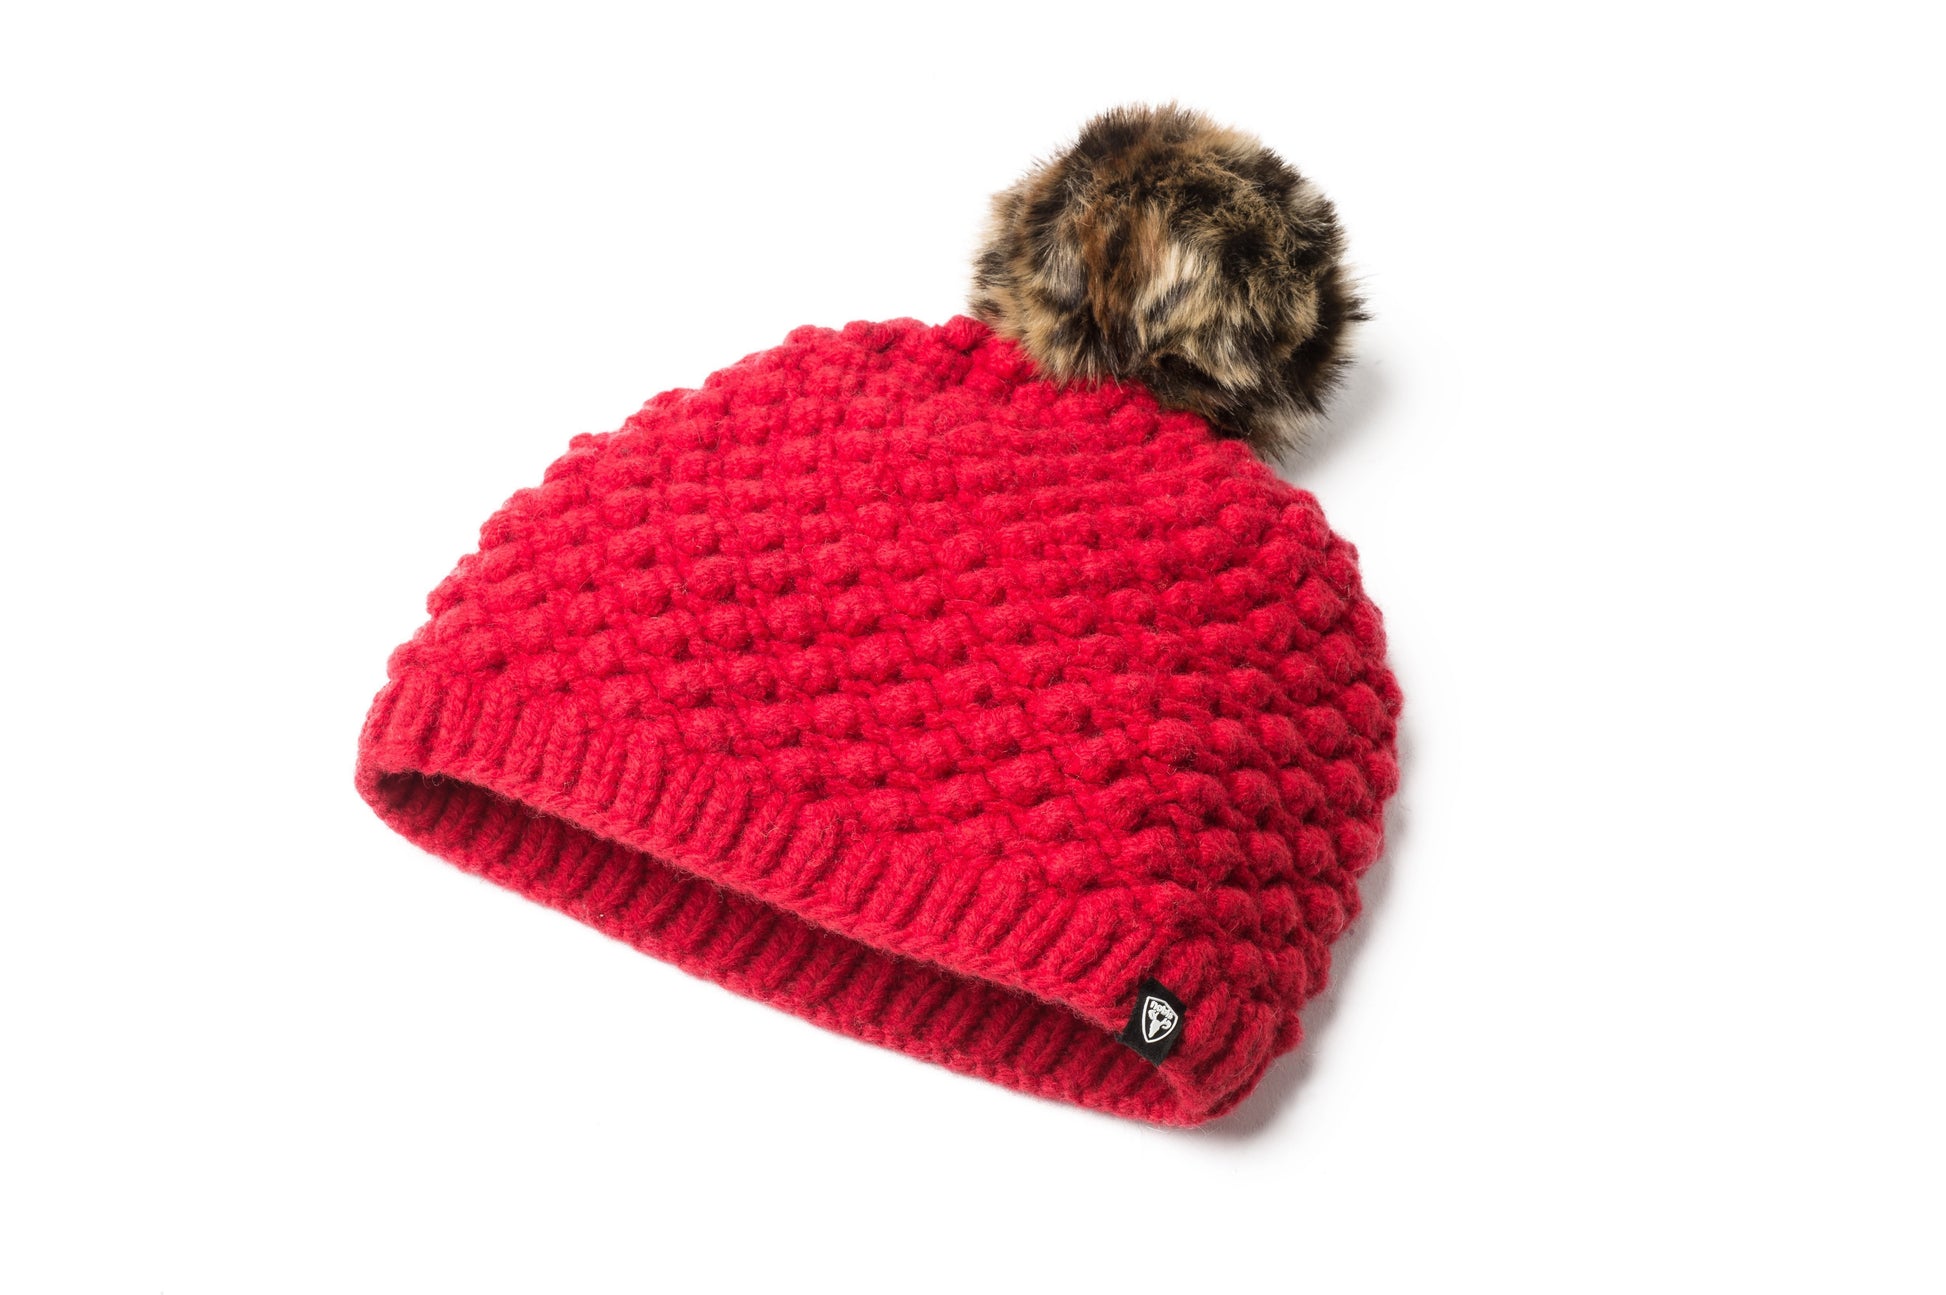 Red bulk knit toque with faux fur pom pom on top